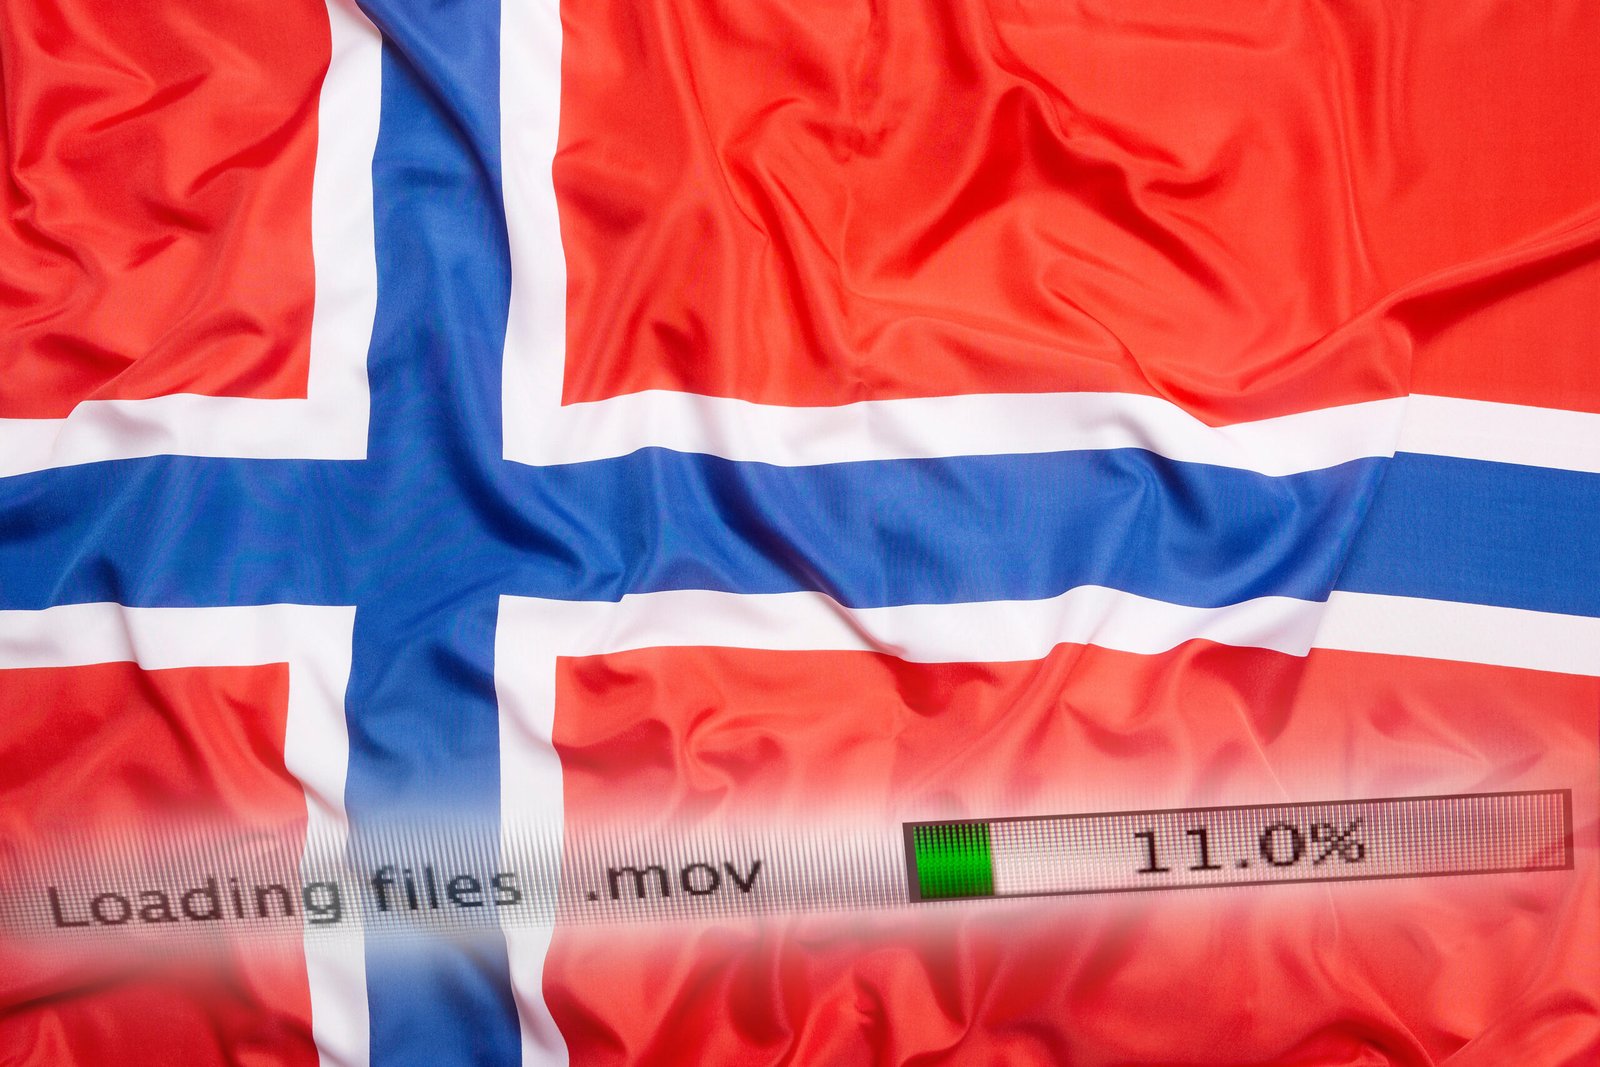 Ivanti Zero-Day Exploit Disrupts Norway’s Government Services – Source: www.darkreading.com